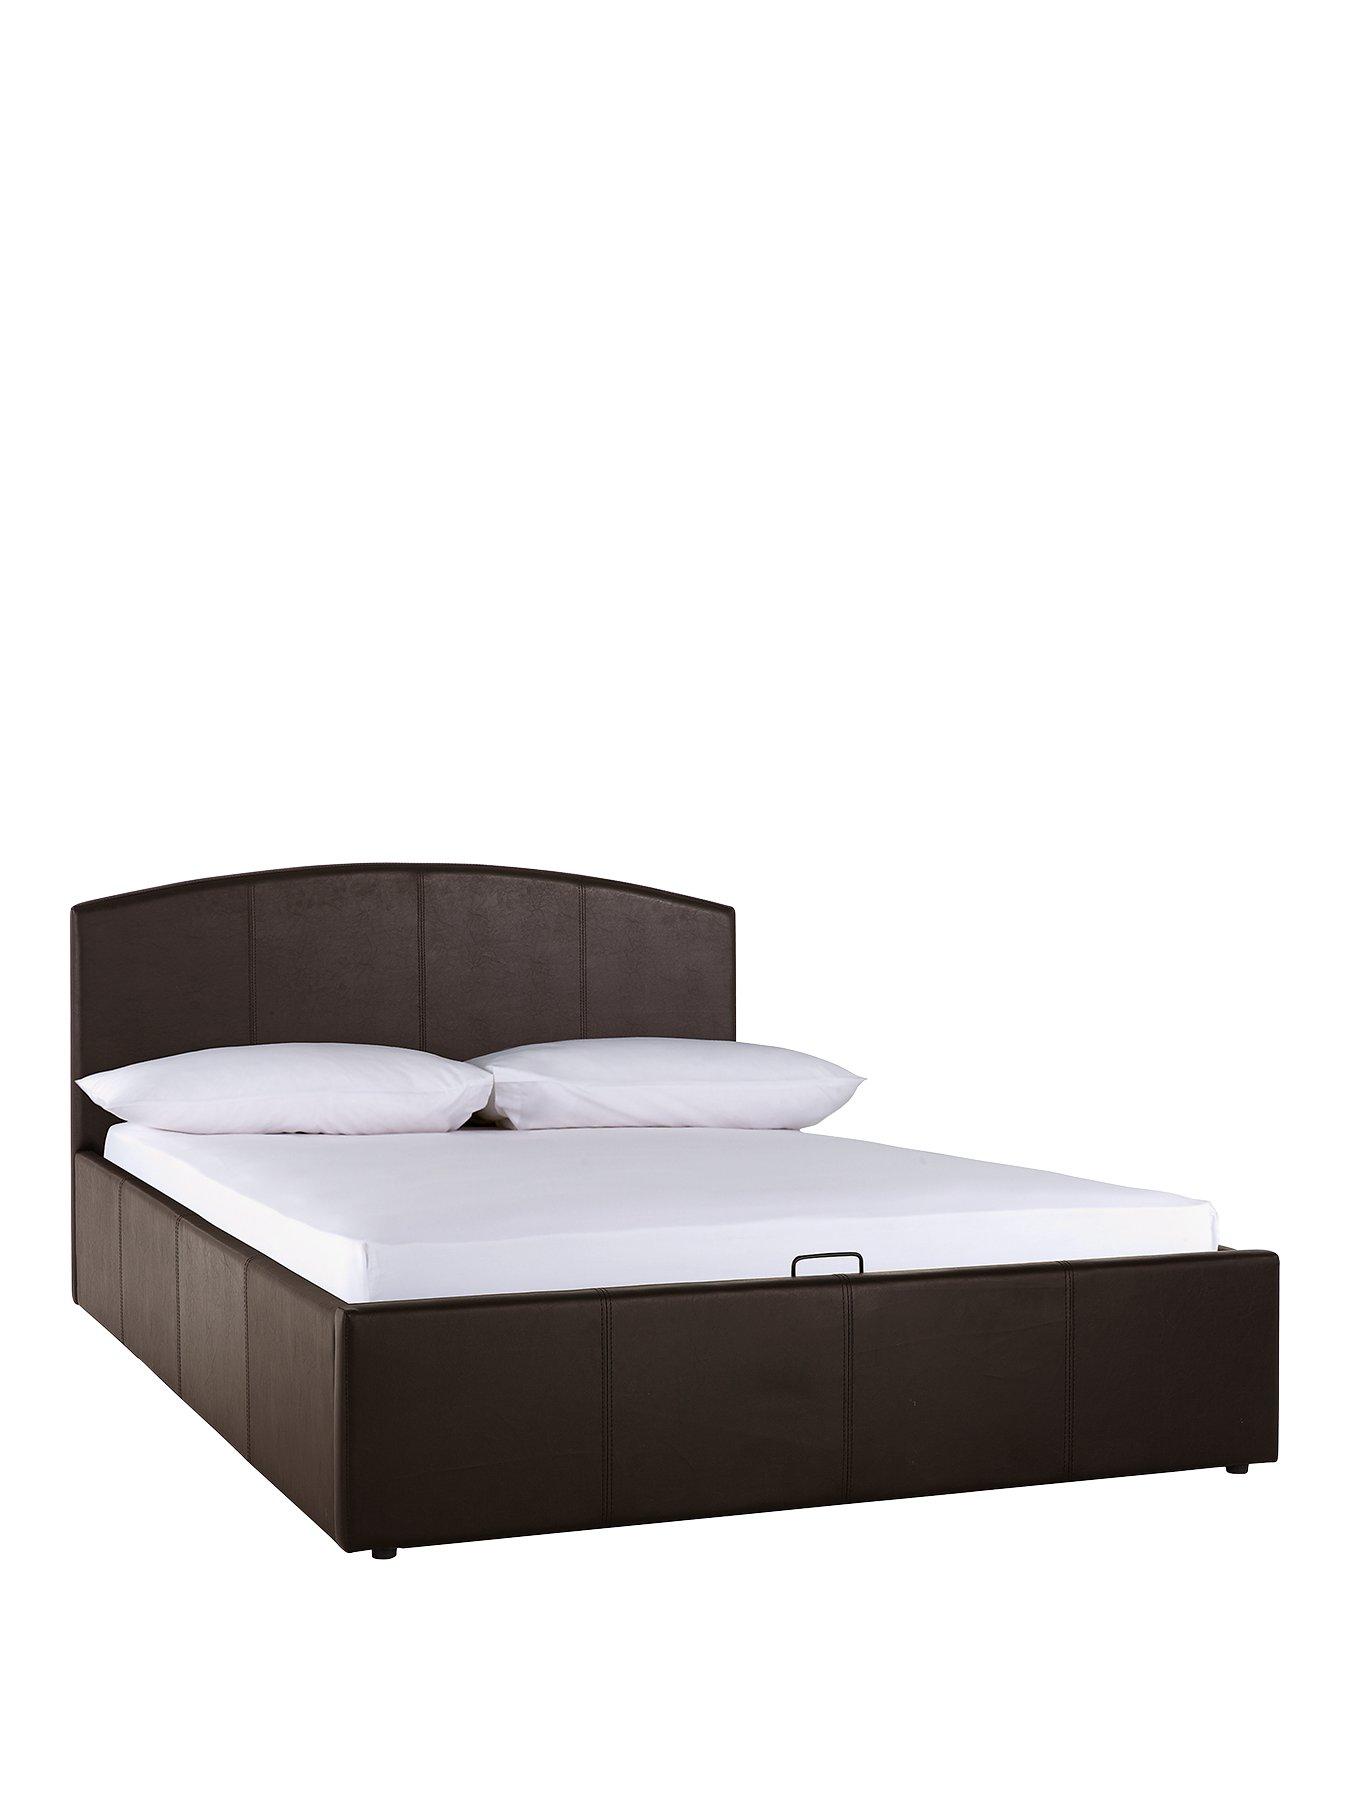 Storage bed and mattress